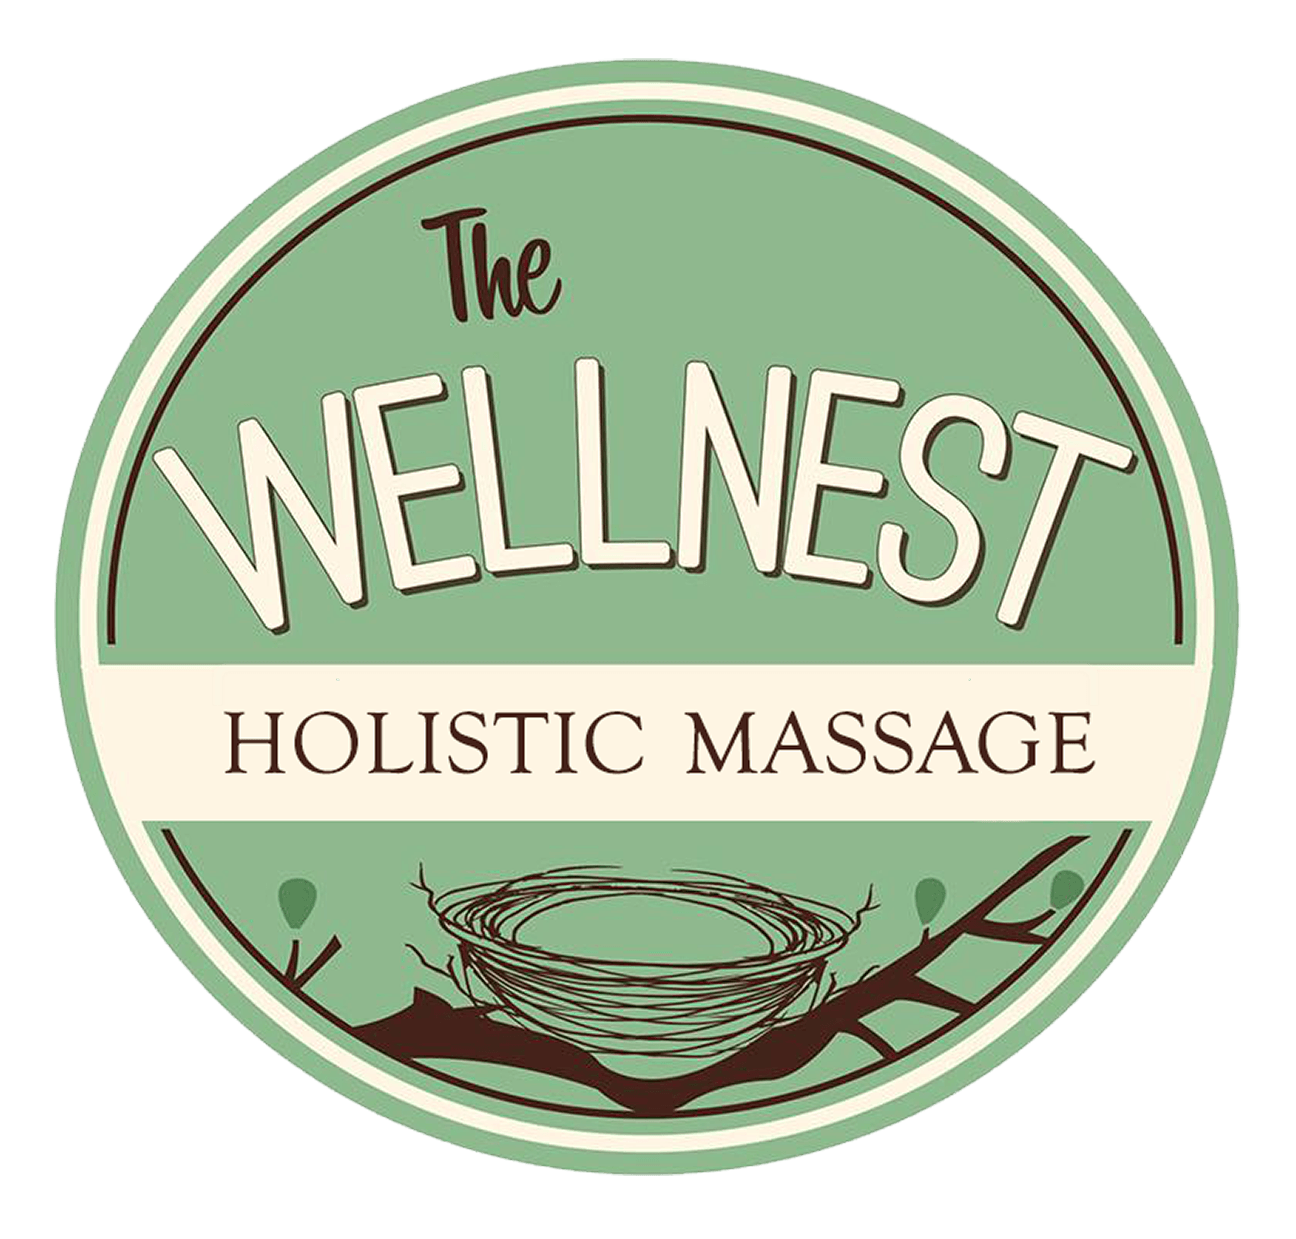 The WellNest Holistic Massage